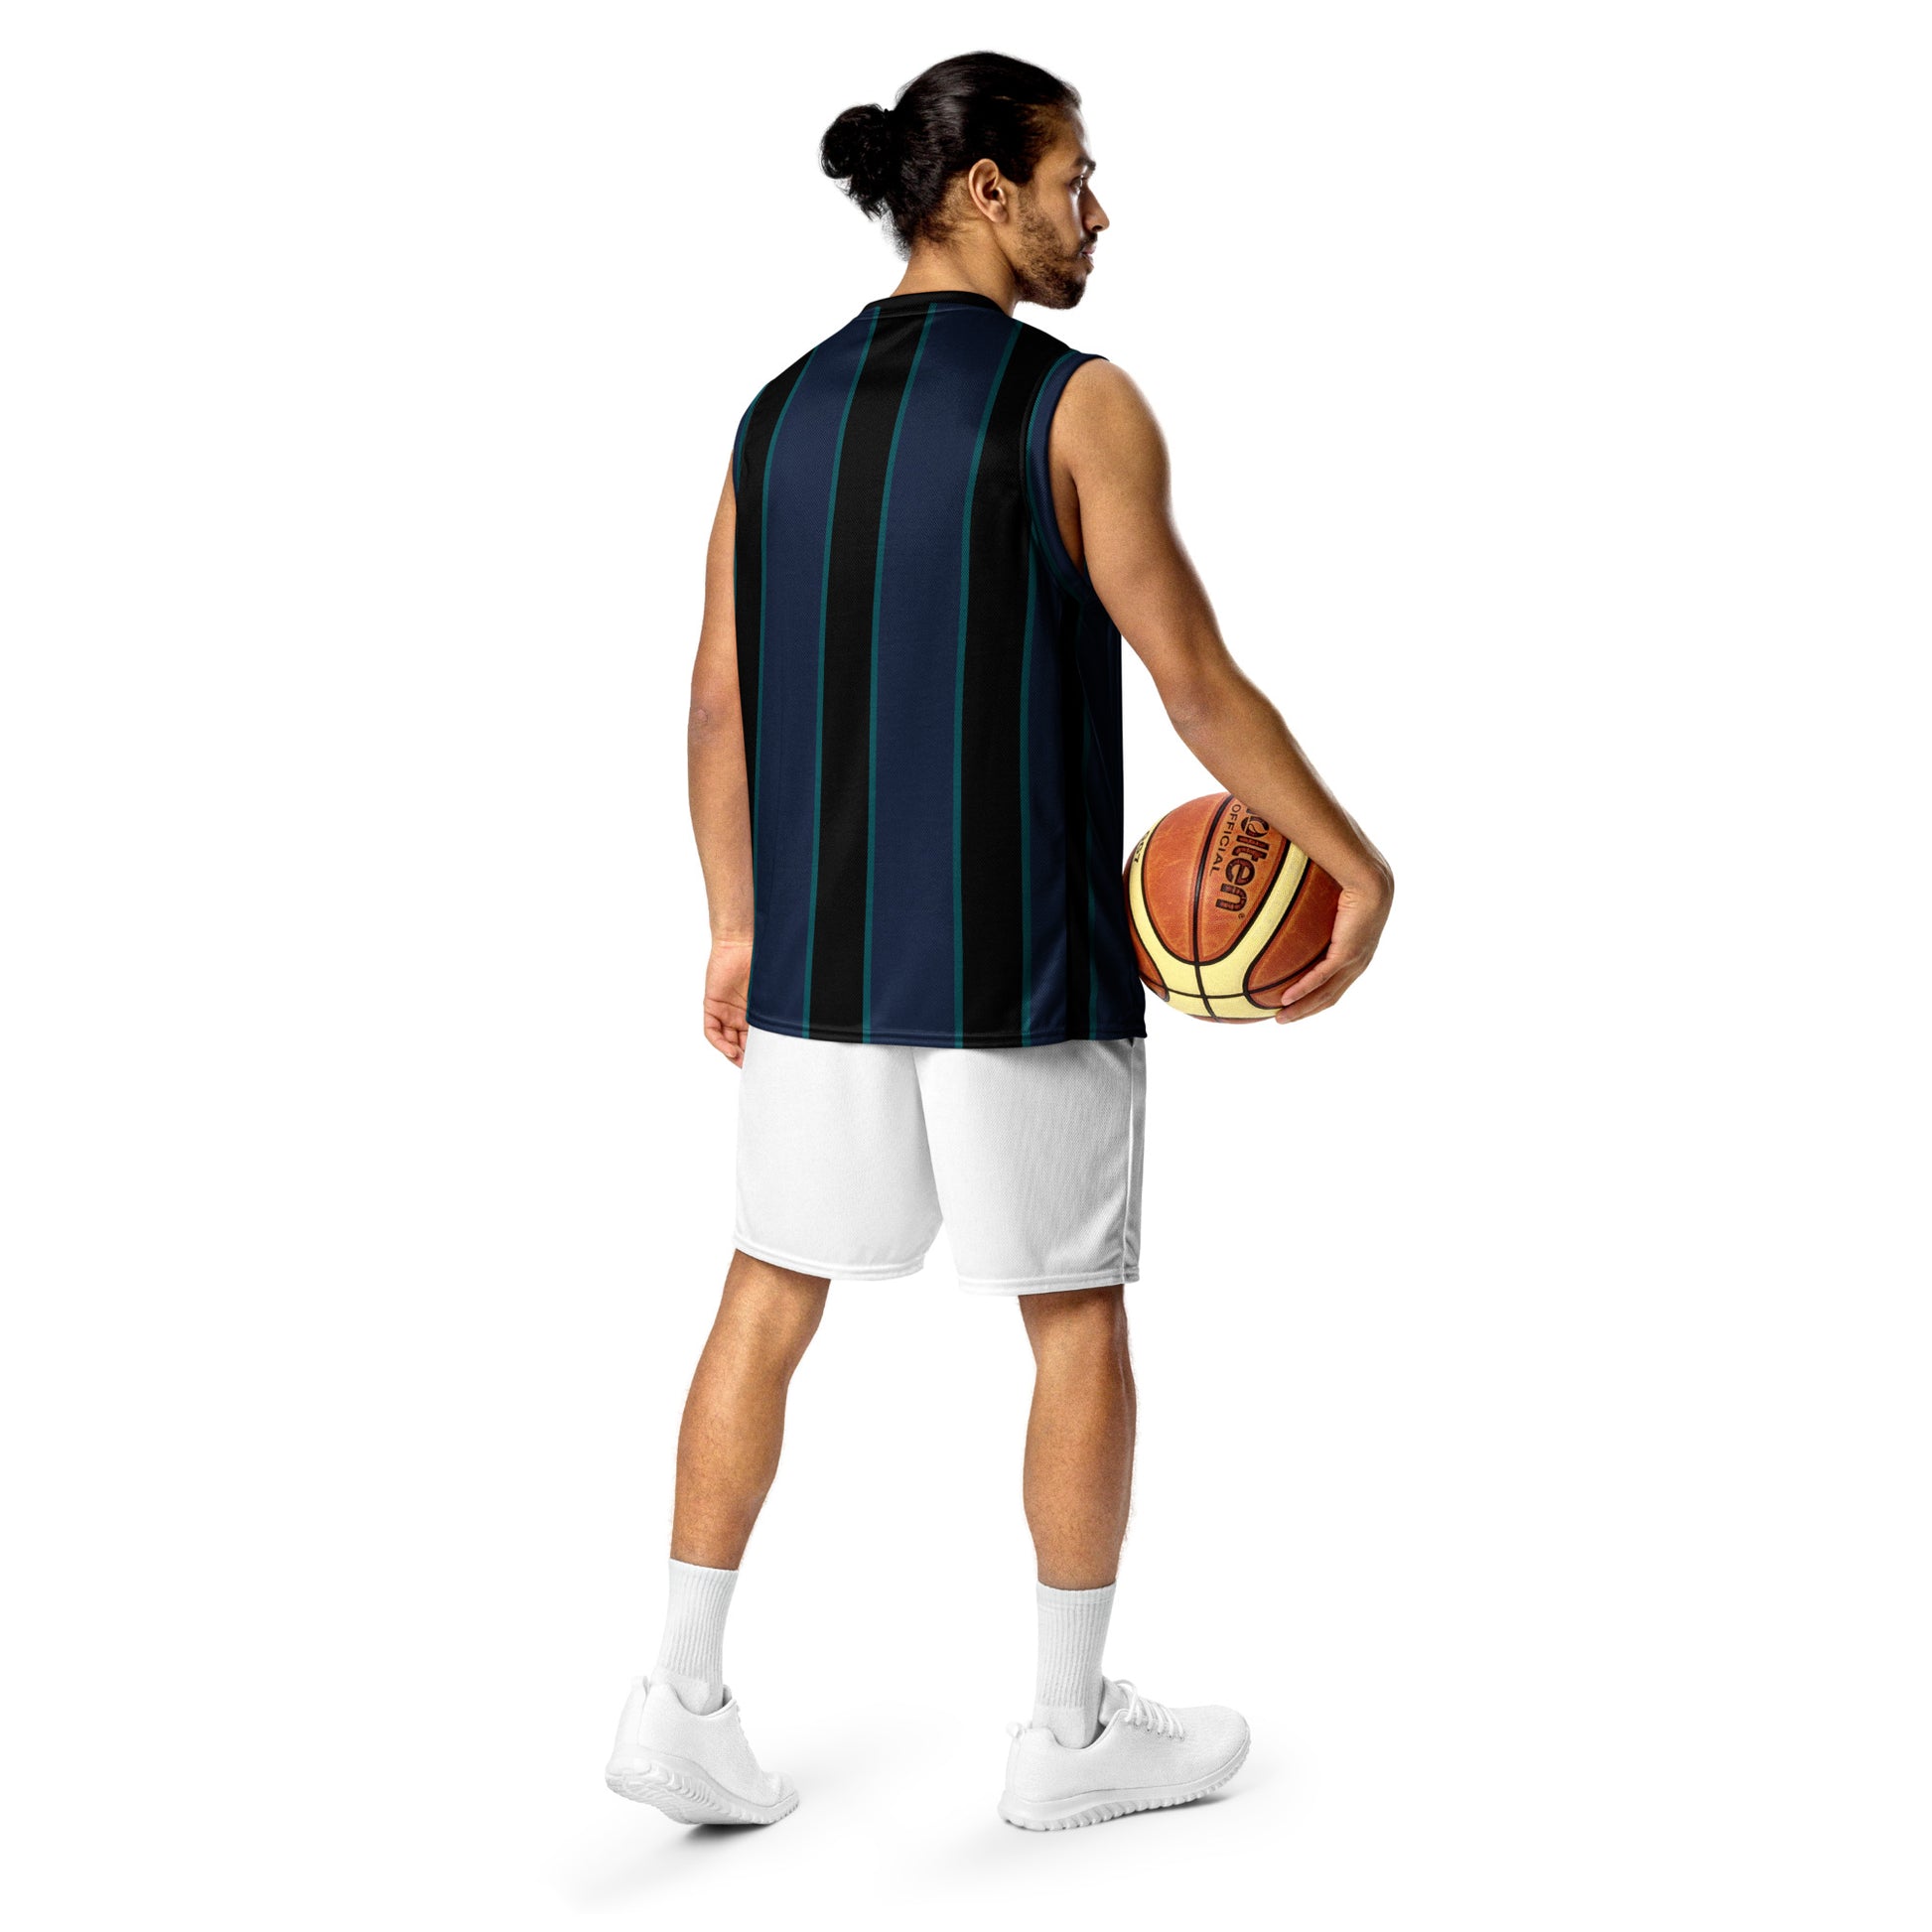 Unisex Basketball Jersey